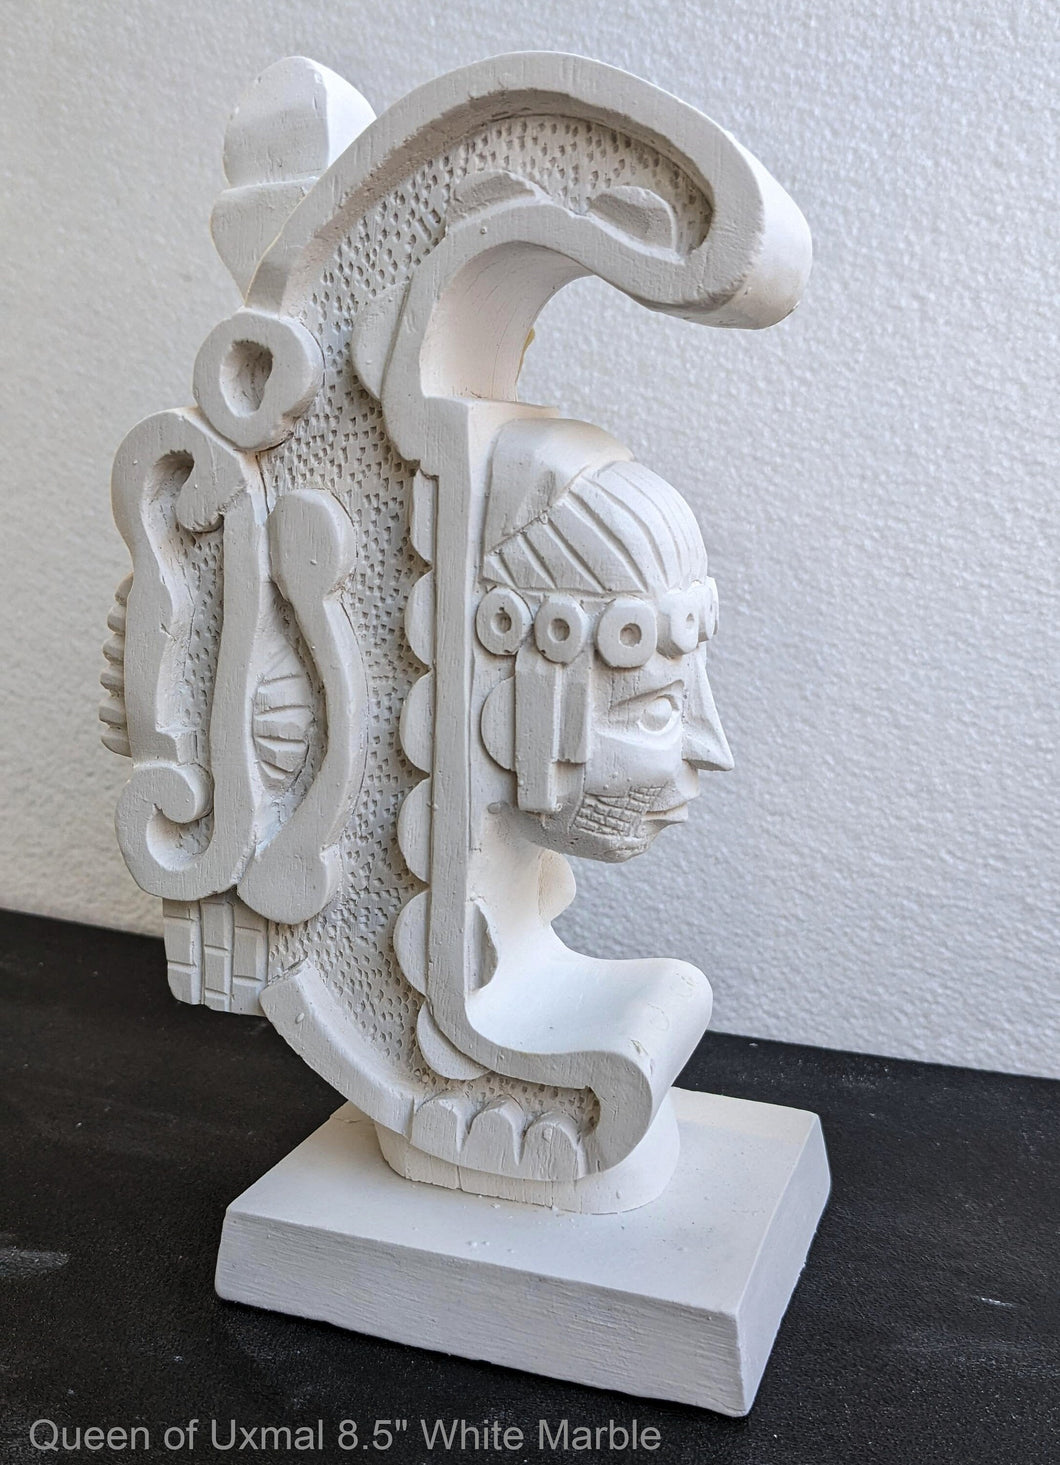 Aztec Mayan Queen of Uxmal Architectural element bust Sculpture 8.5